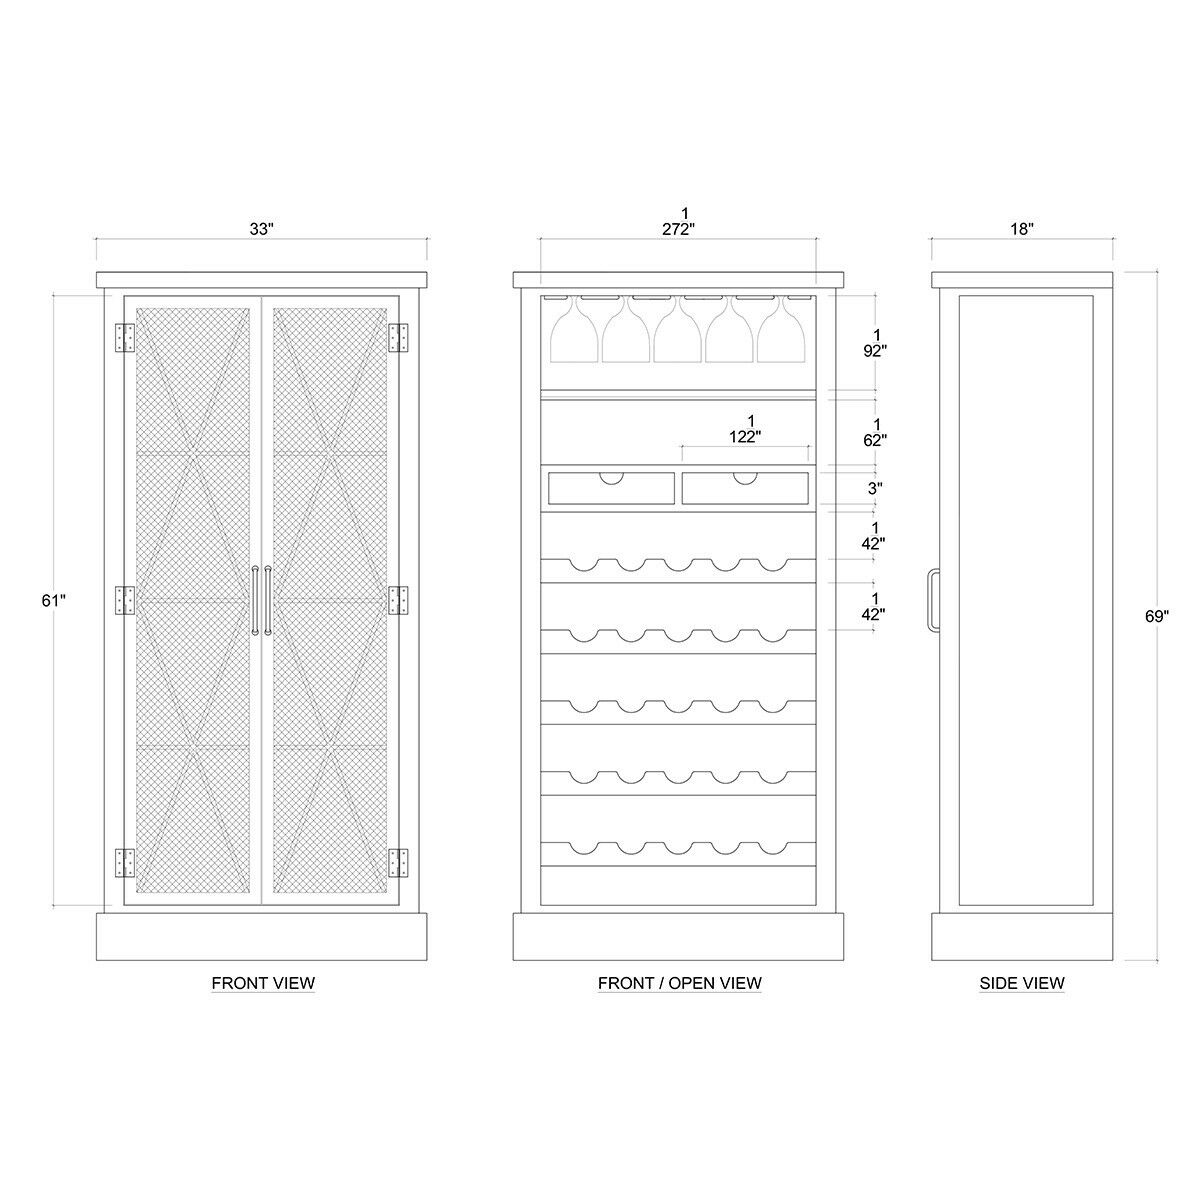 Dante Wine Cabinet Storage - Furniture on Main